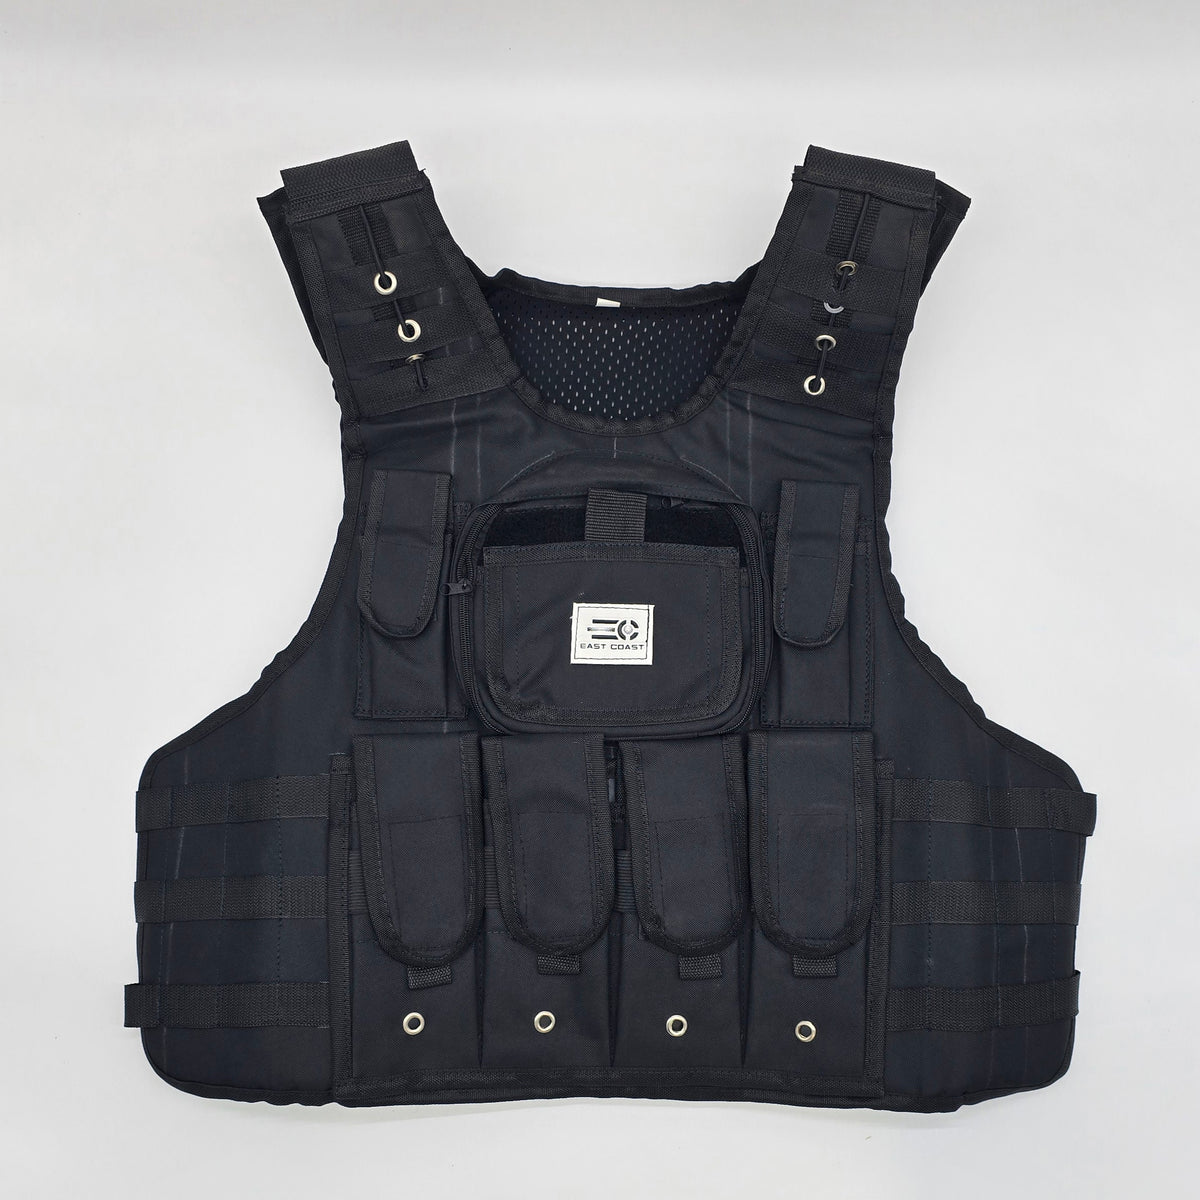 East Coast Tactical Airsoft Vest | Fully Adjustable | Color: Black